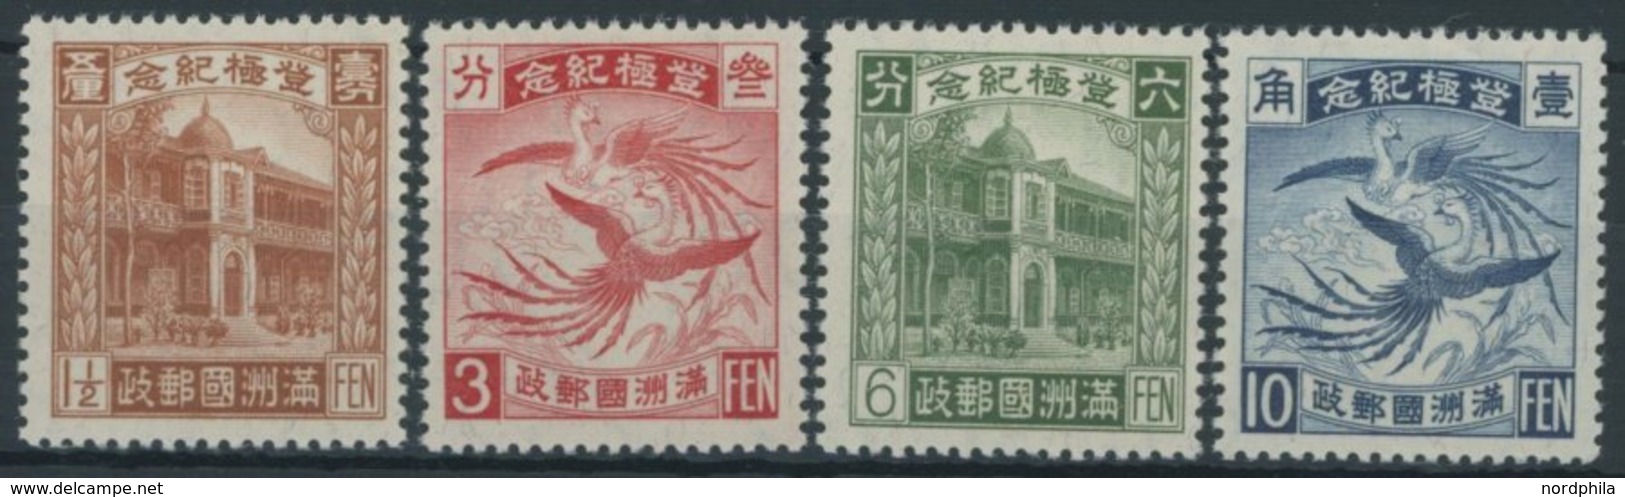 MANDSCHUKUO 23-26 **, 1934, Kaiserkrönung, Postfrischer Prachtsatz - 1932-45 Manchuria (Manchukuo)